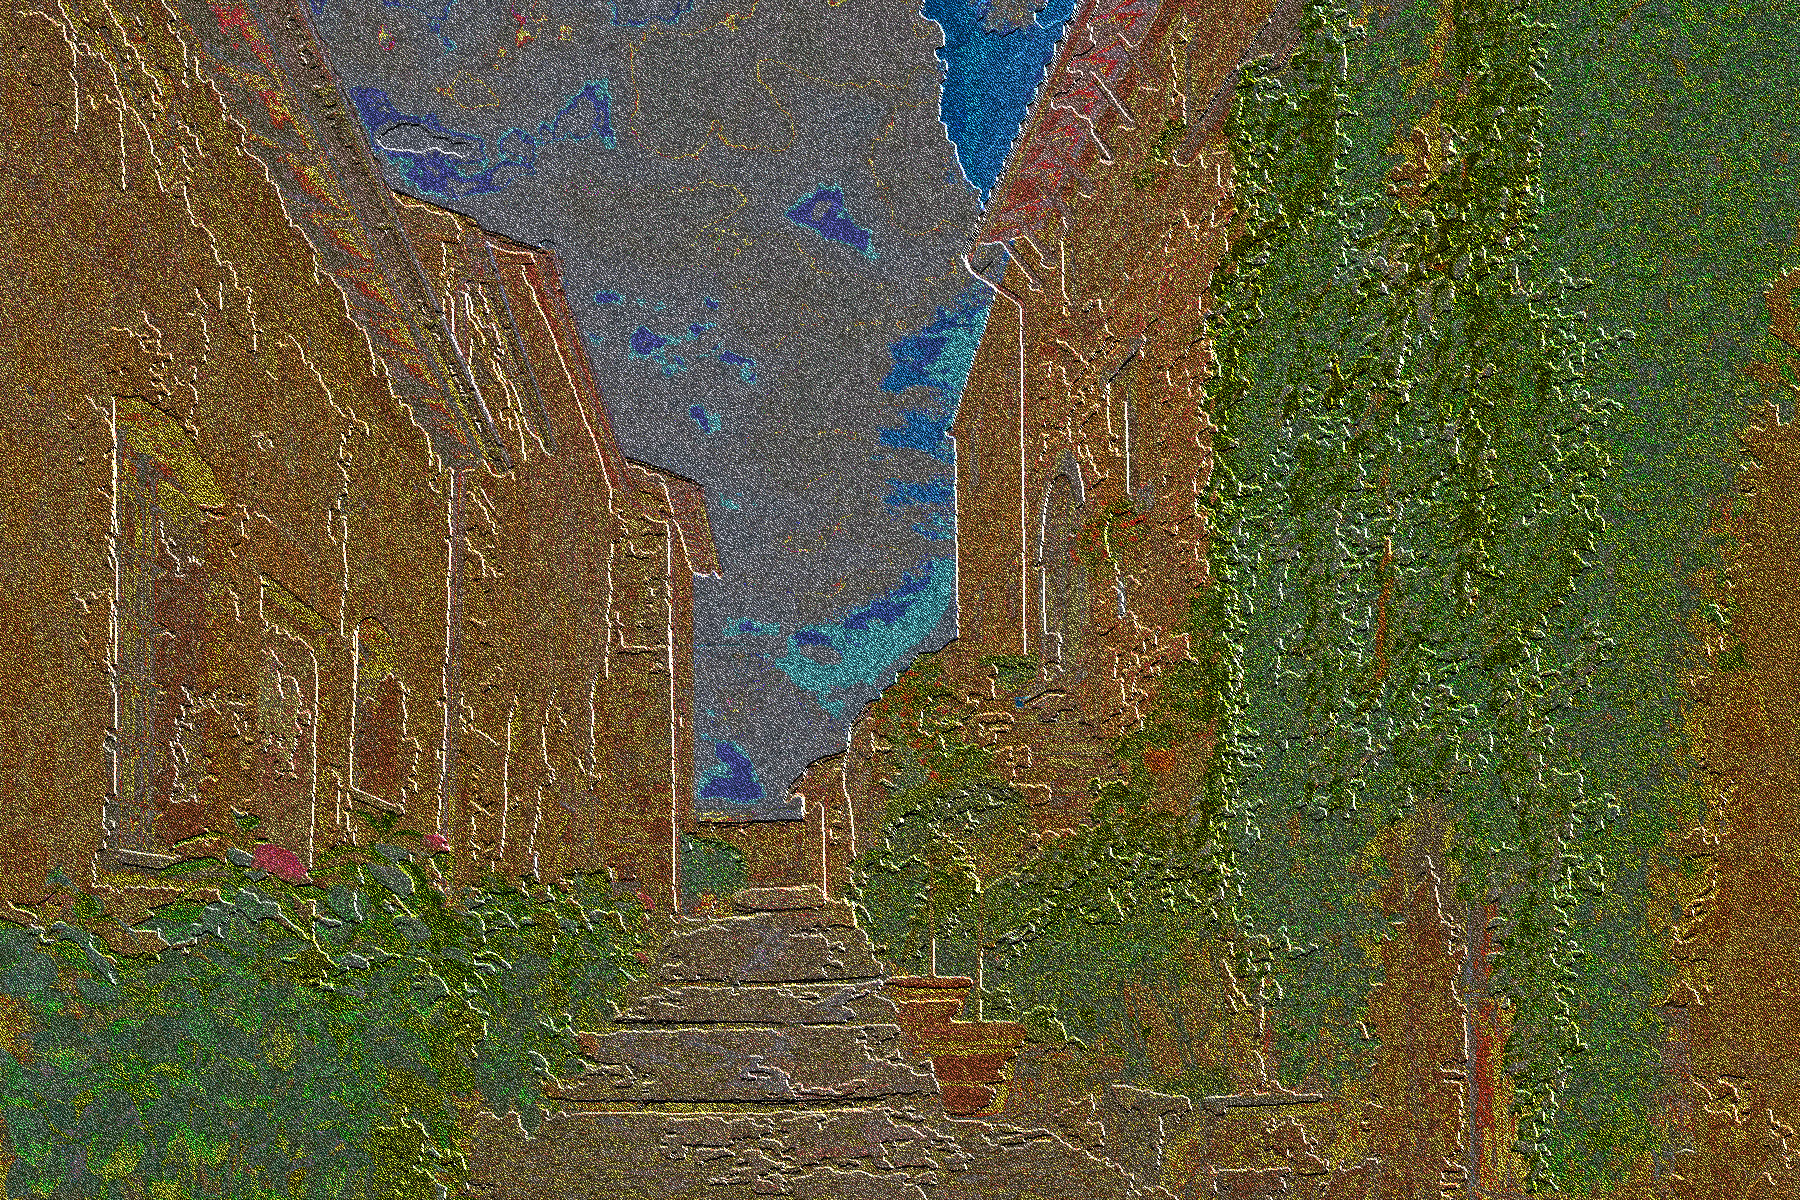 2021-04-11 11-26-22 pexels-pixabay-210017 with effect P (BasReliefThruAnguishLO), , colours.jpeg